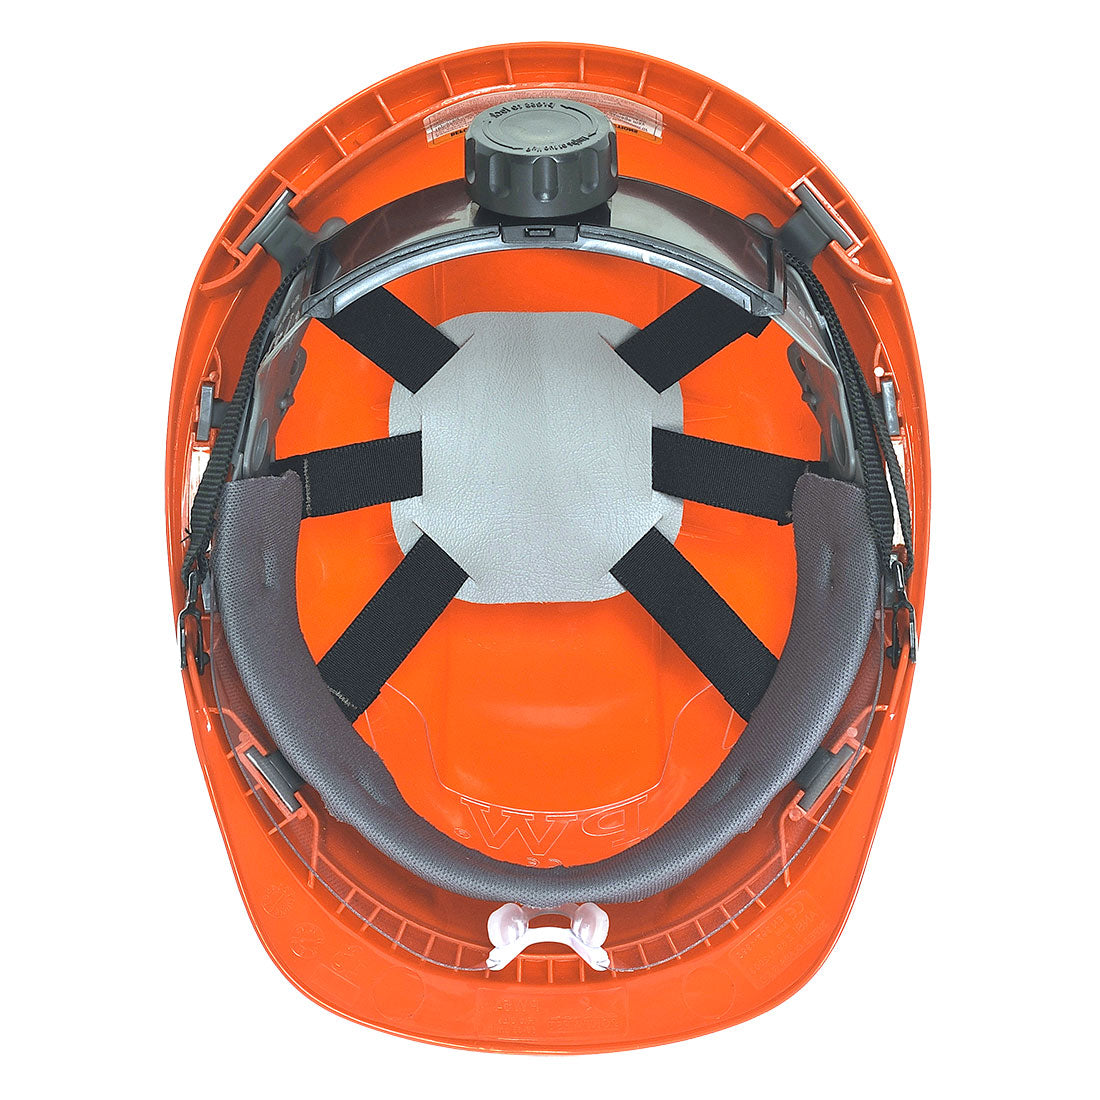 Portwest PW54 Endurance Plus Visor Helmet - Orange